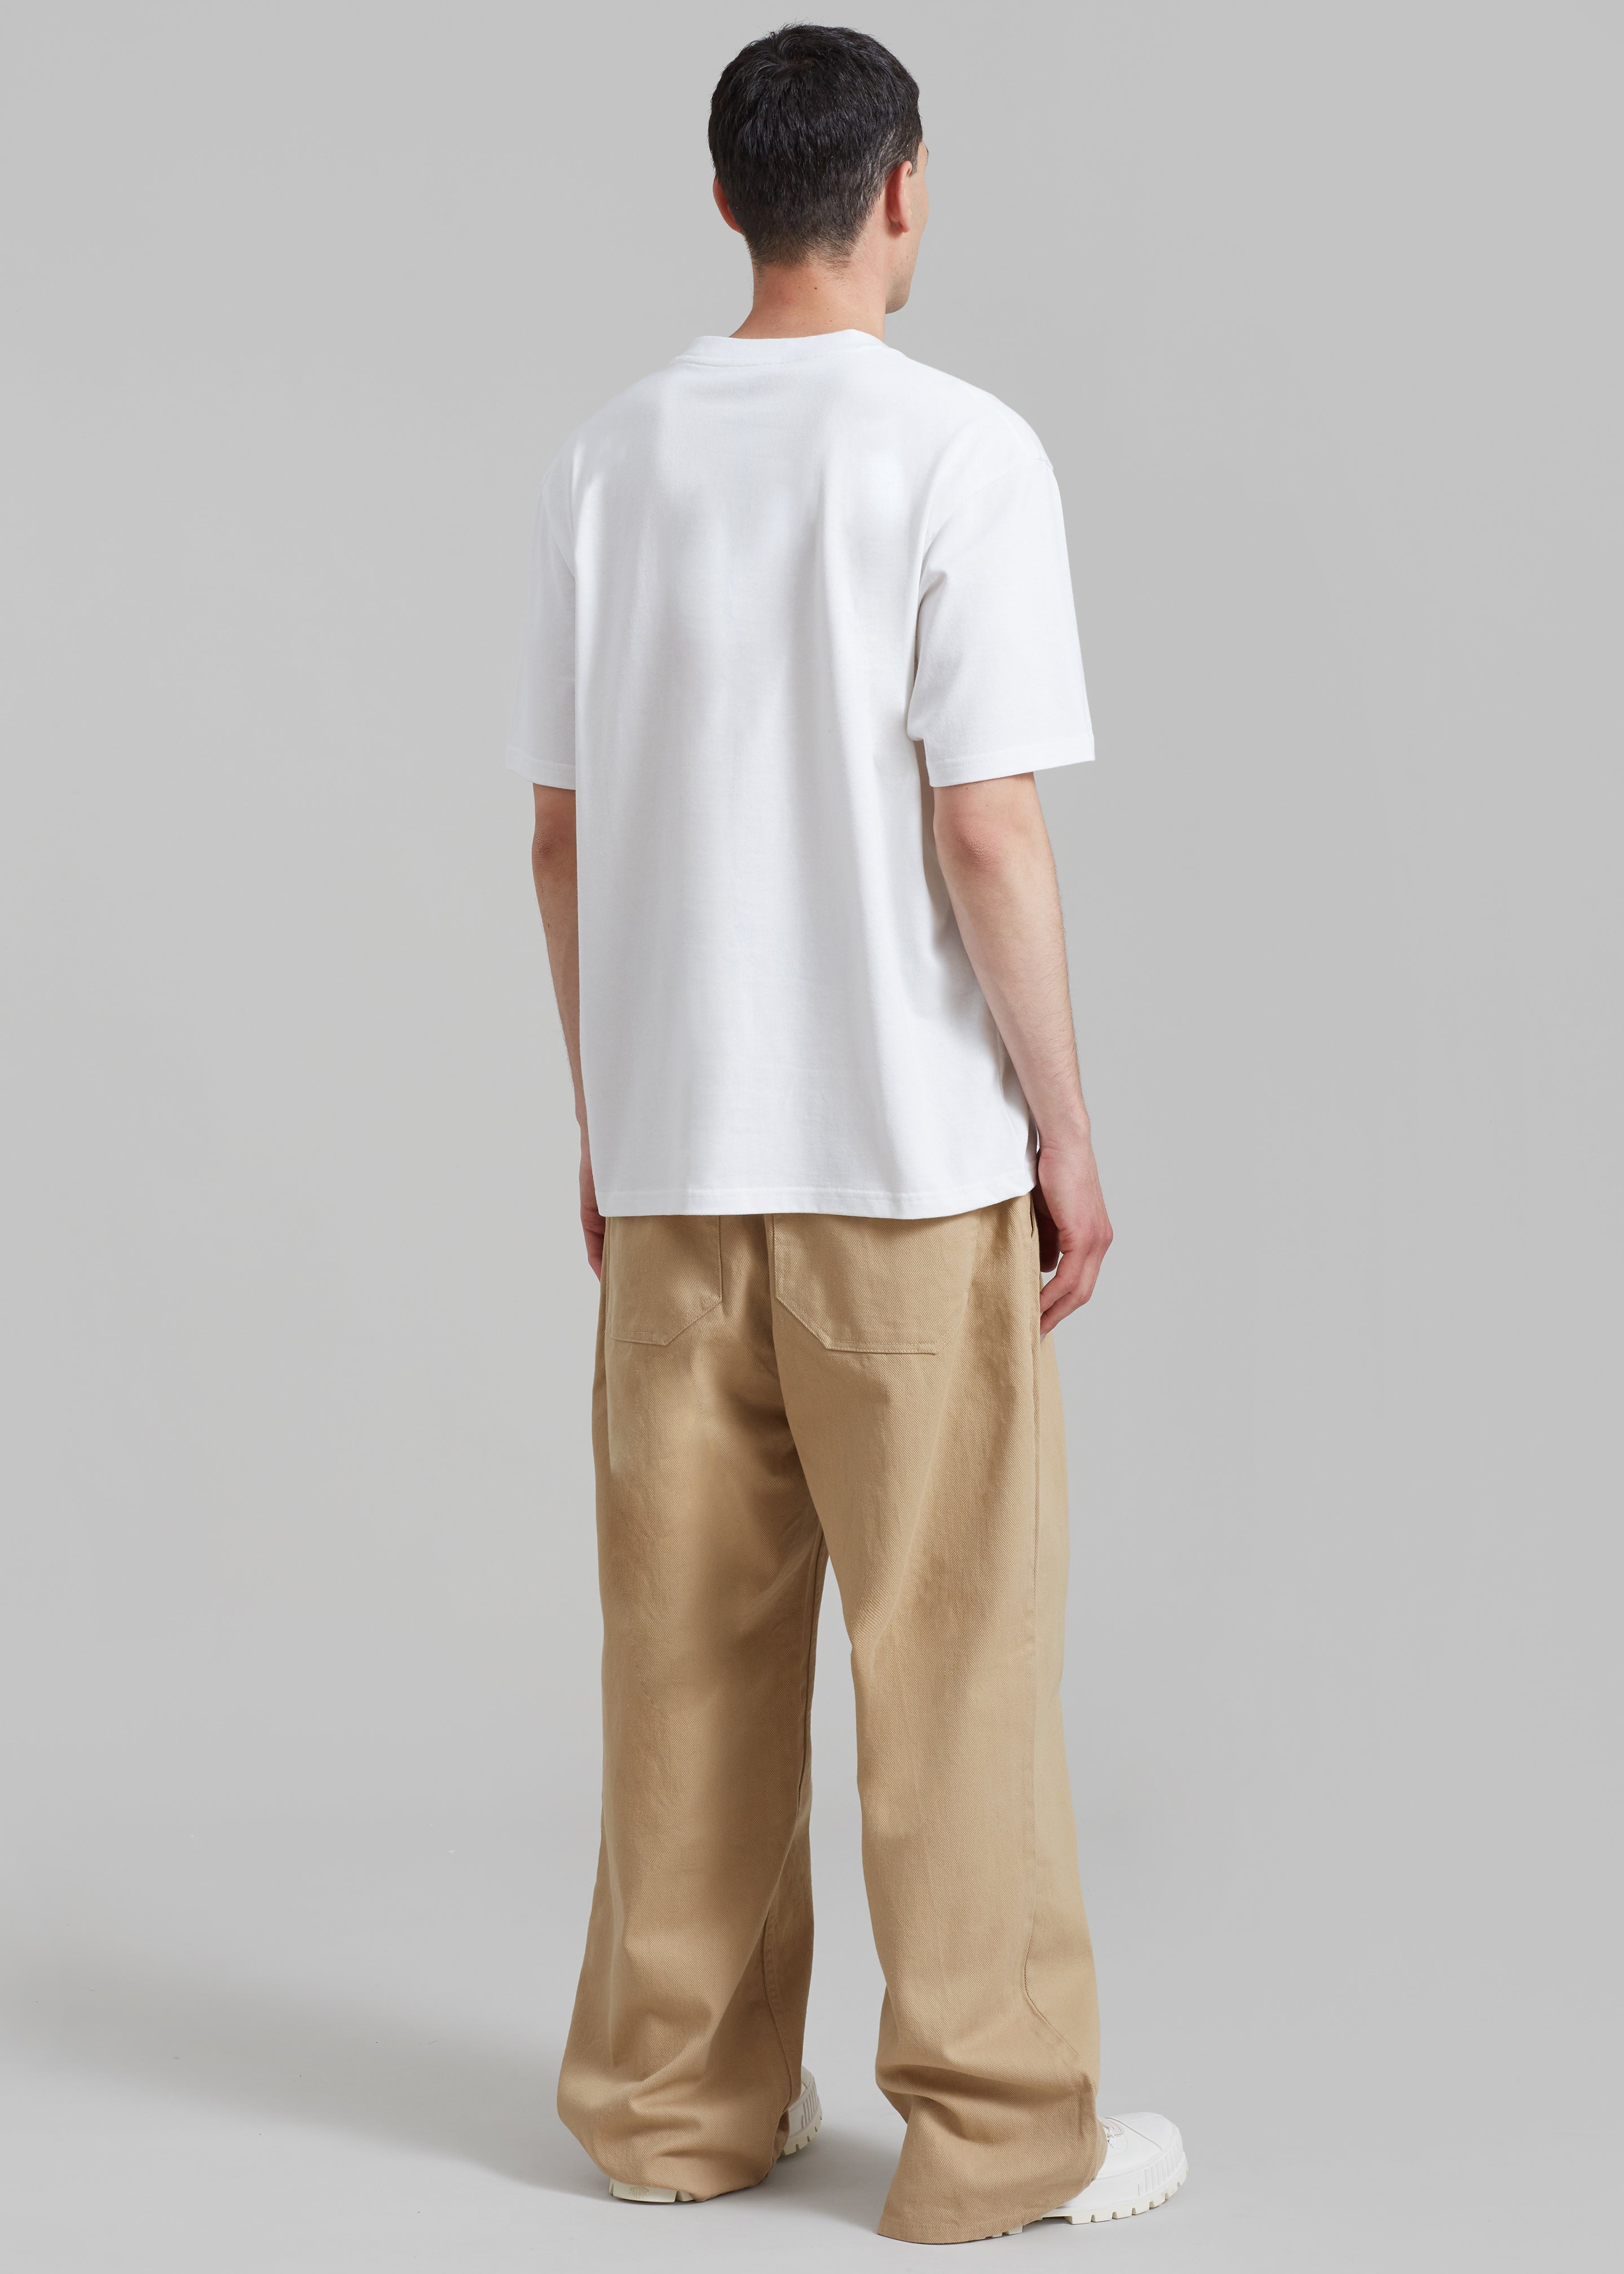 JW Anderson Profile Stud Chest Pocket T-Shirt - White - 5